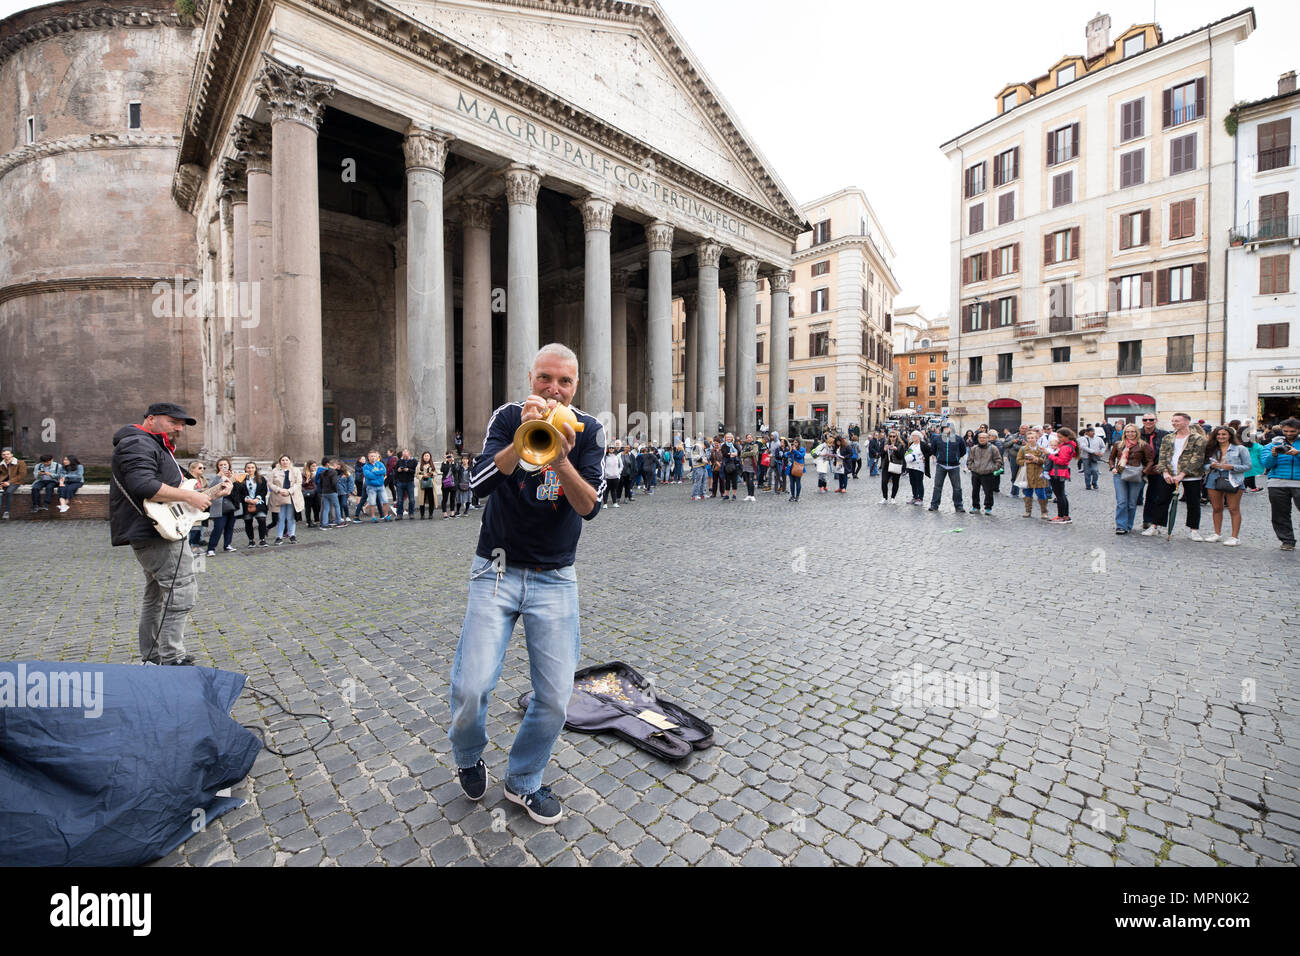 Piazza della Rotonda, Pantheon Rome Italy, scene tourists and trumpet player street musician. Stock Photo